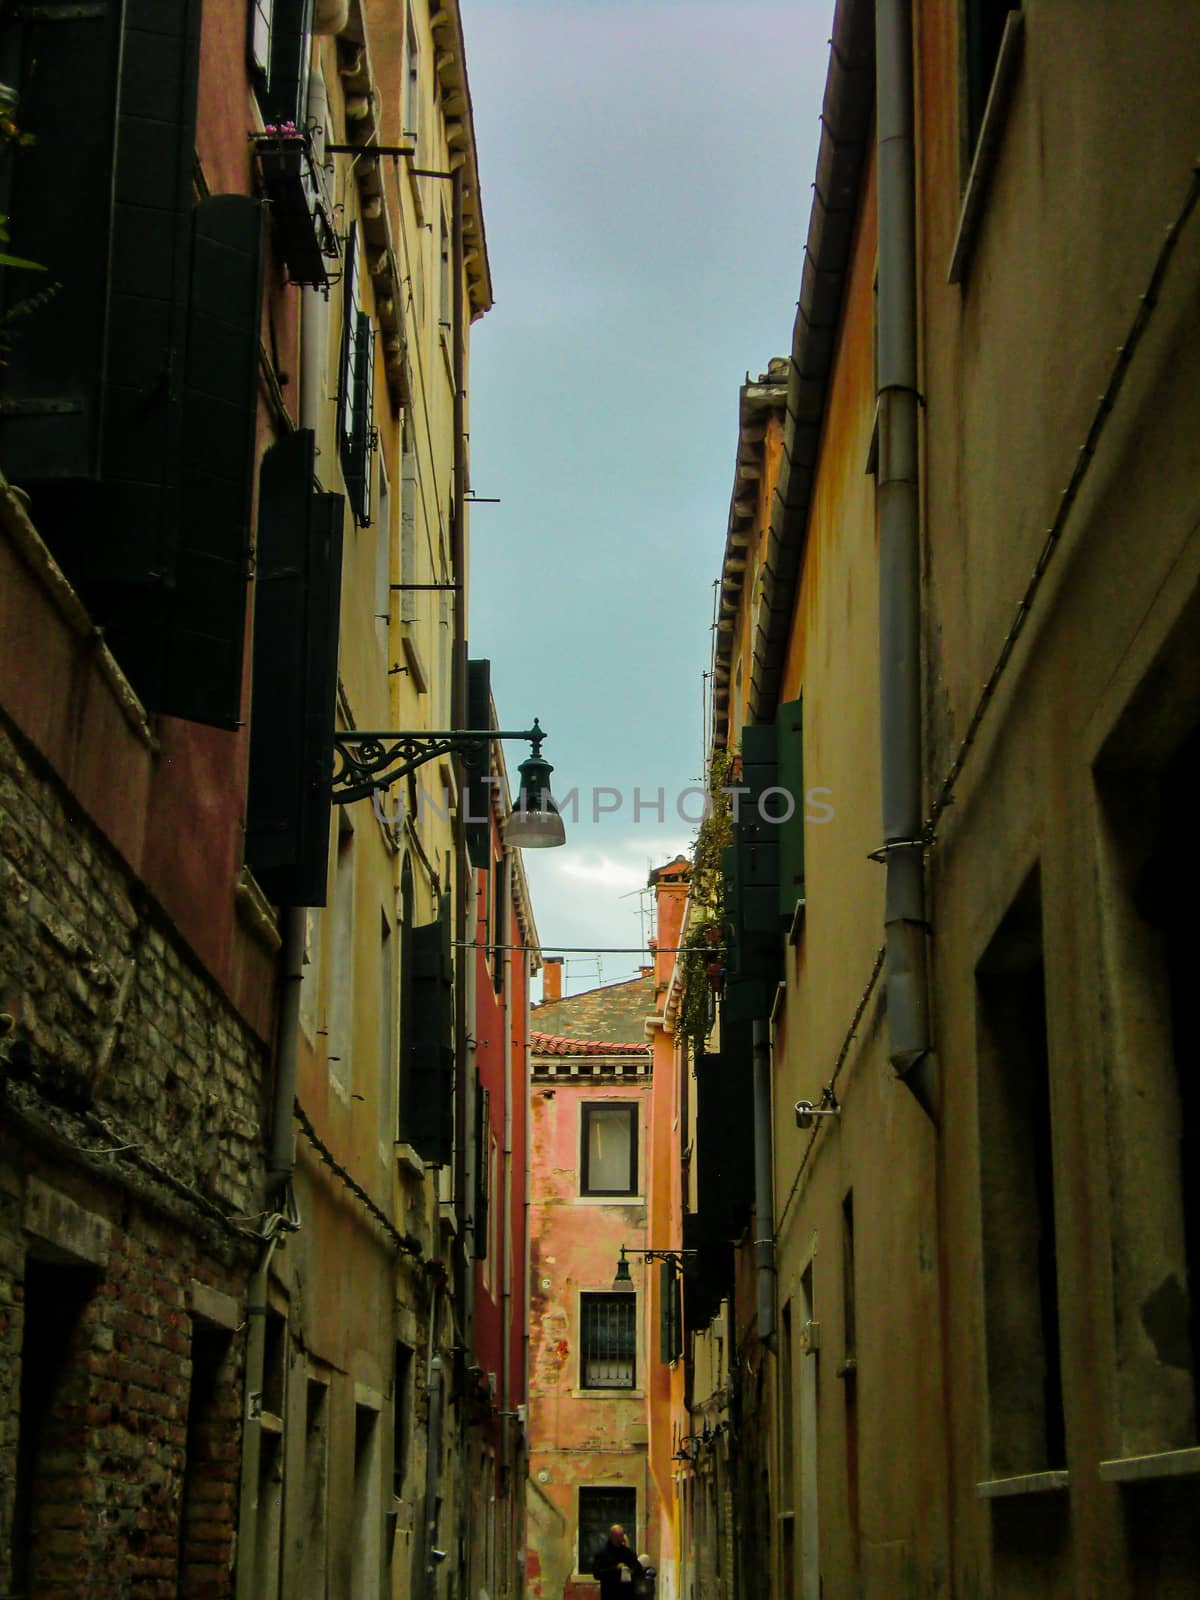 Street of Venice #7 by pippocarlot